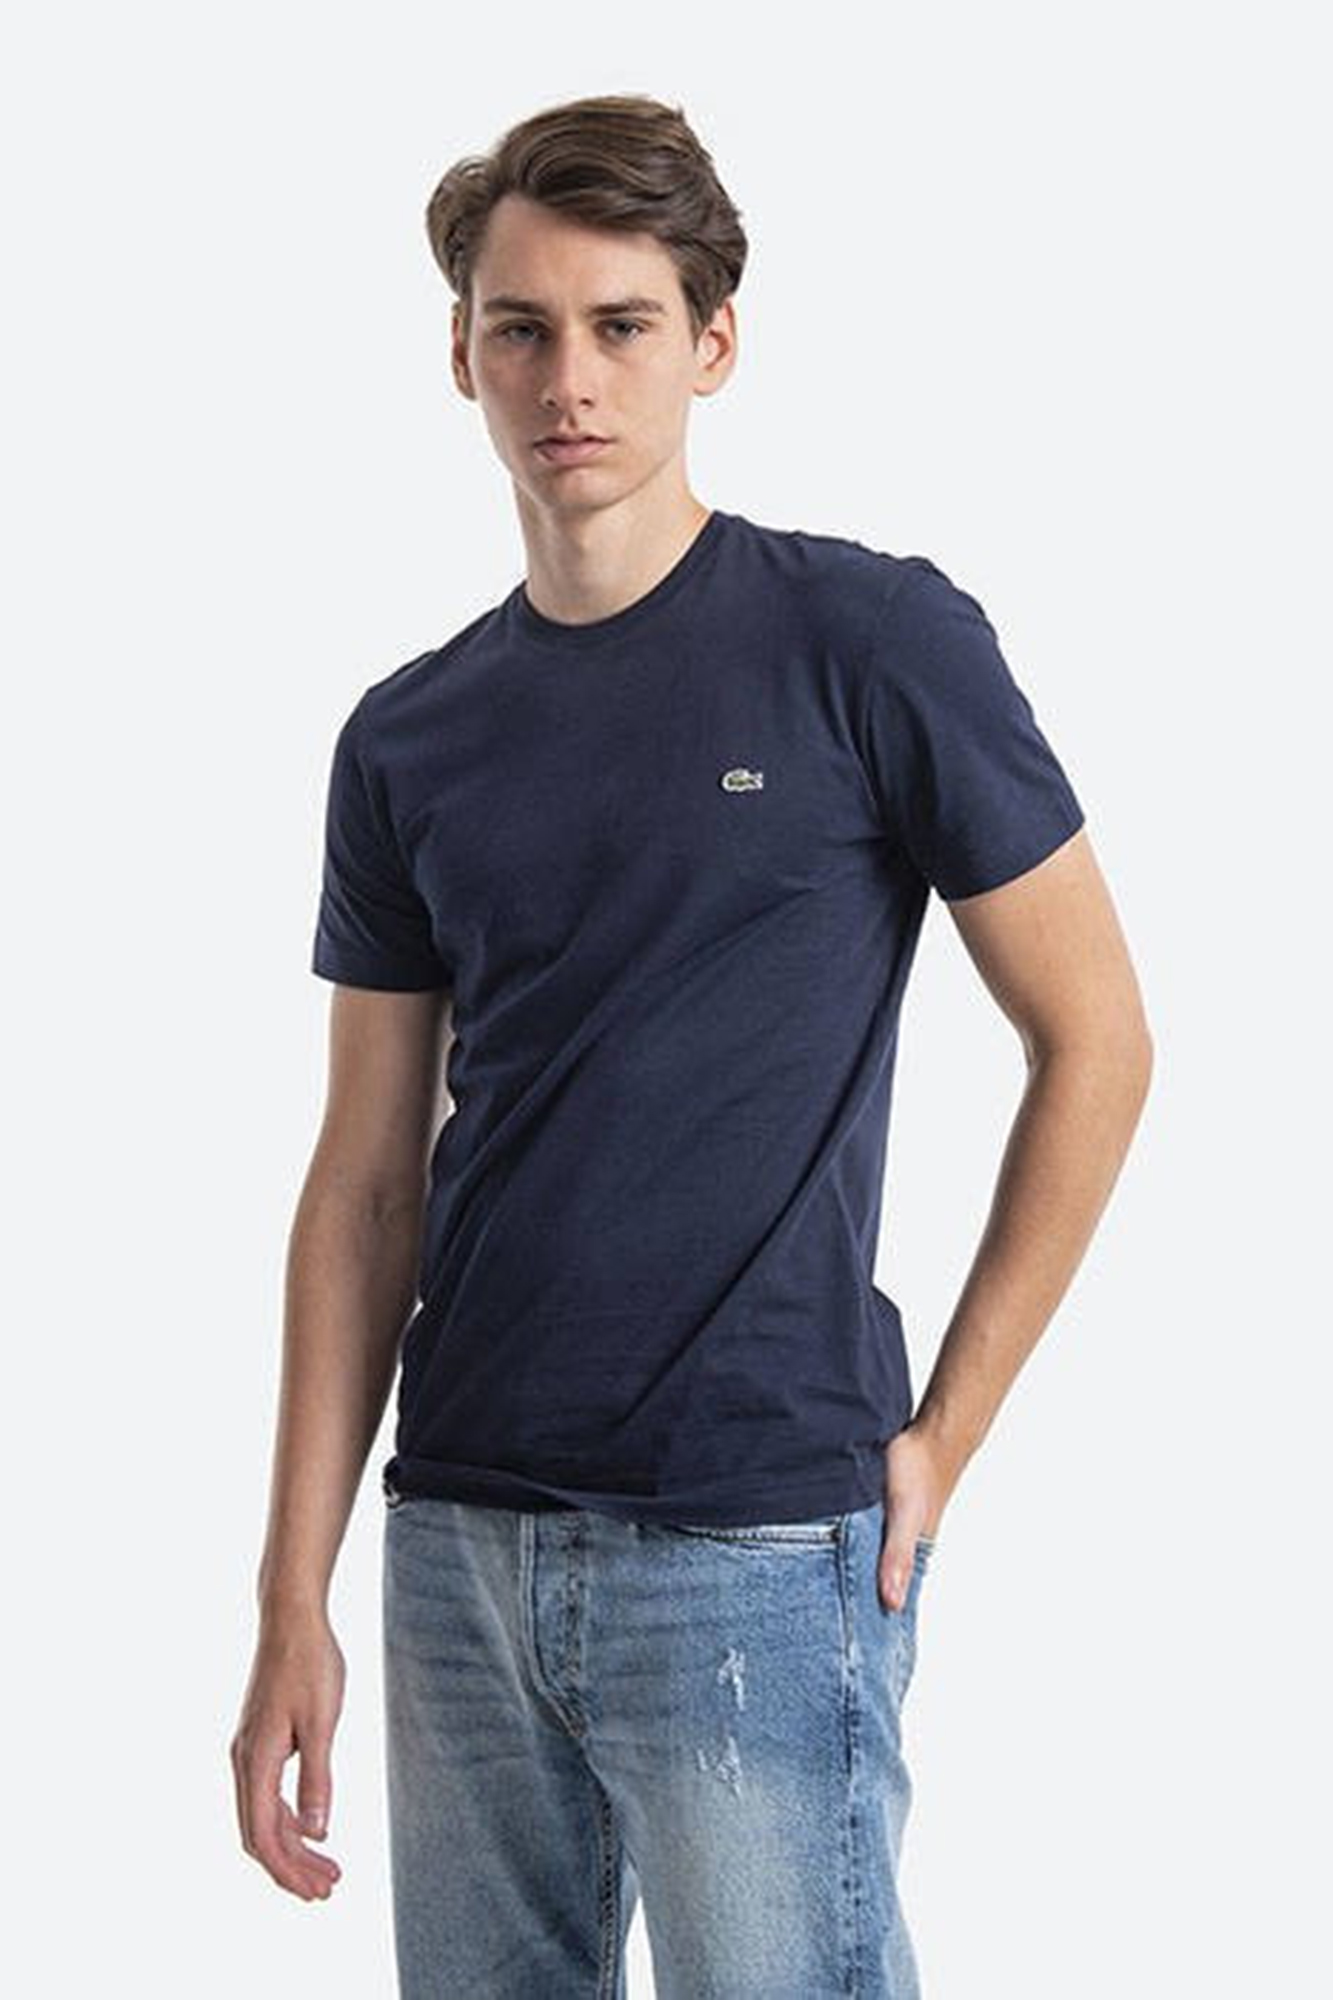 Camisetas Lacoste Hombre  Camiseta de hombre en algodón de rayas anchas  con cuello redondo Azul / Marrón « Portelamor